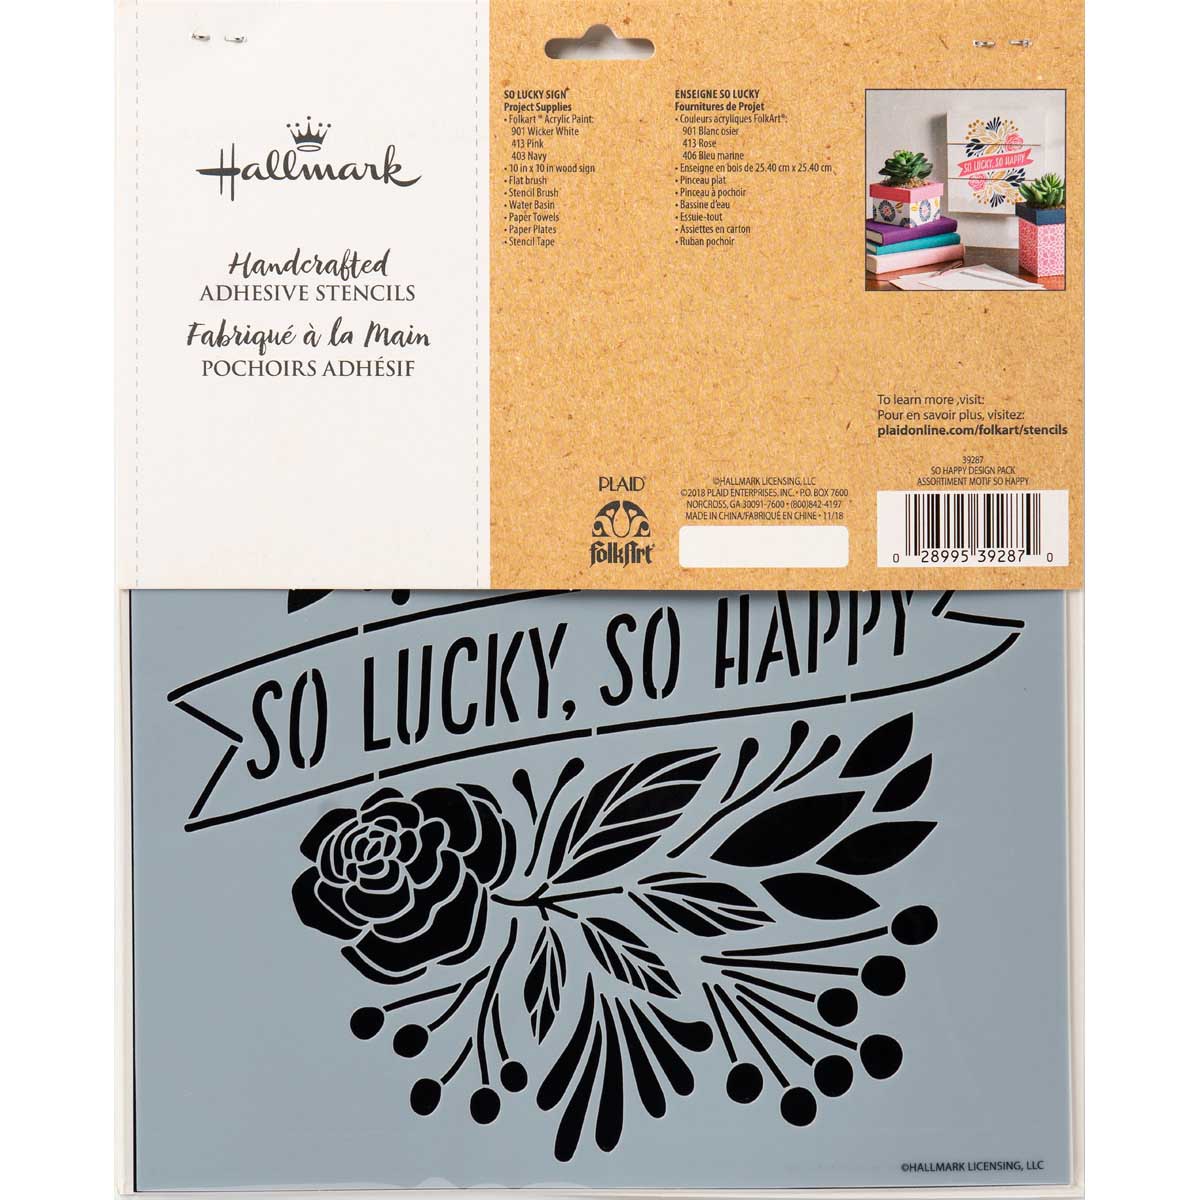 Hallmark Handcrafted Adhesive Stencils - So Happy Design Pack, 8-1/2